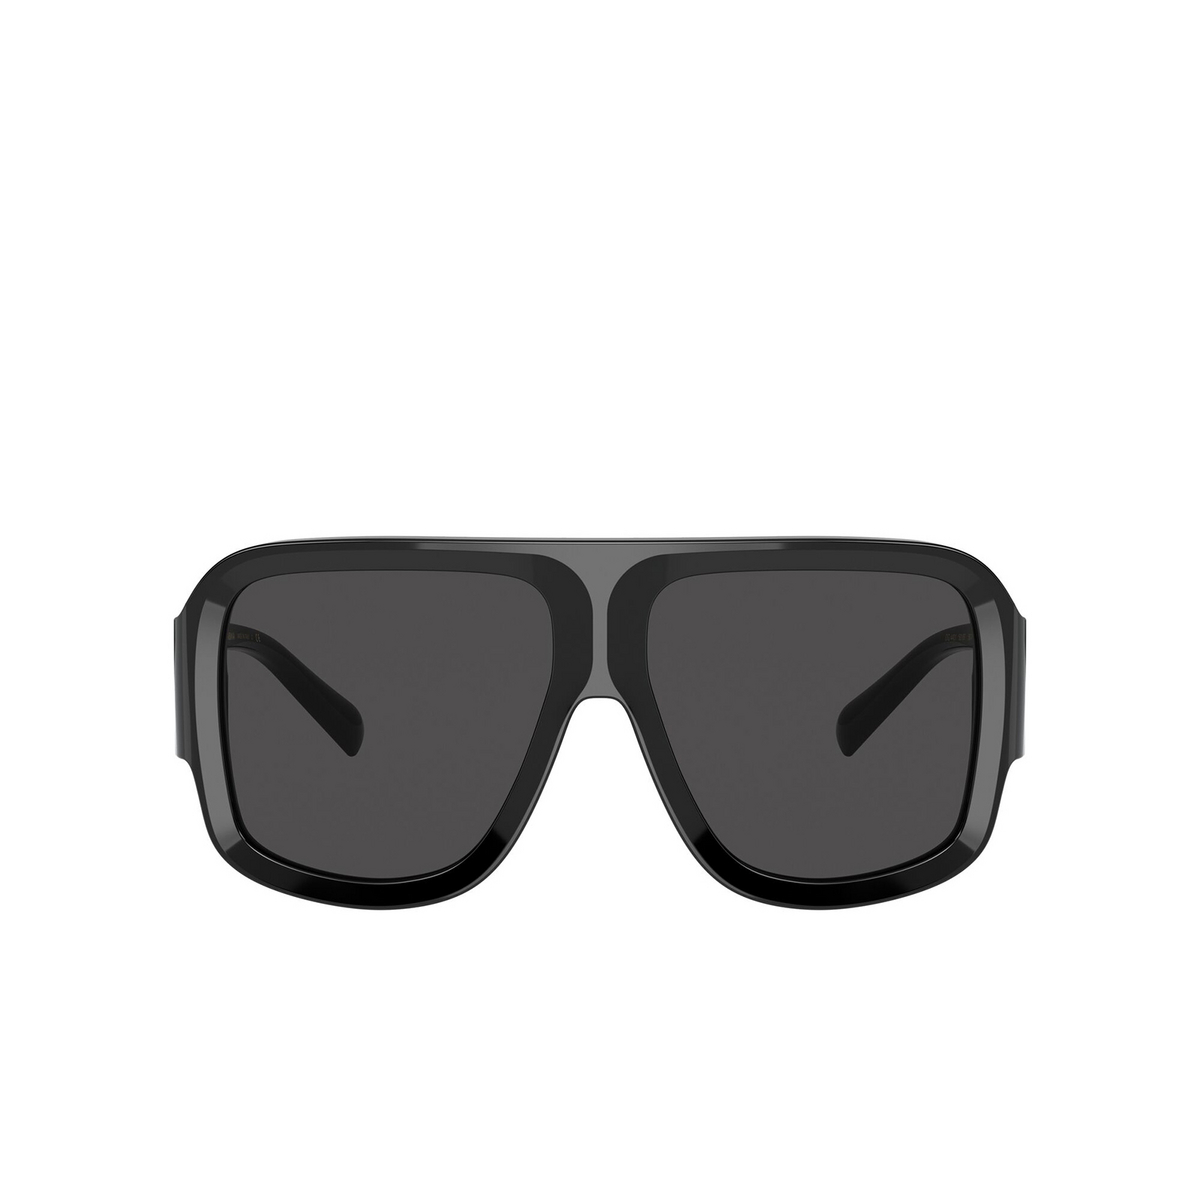 Dolce & Gabbana DG4401 Sunglasses 501/87 Black - front view